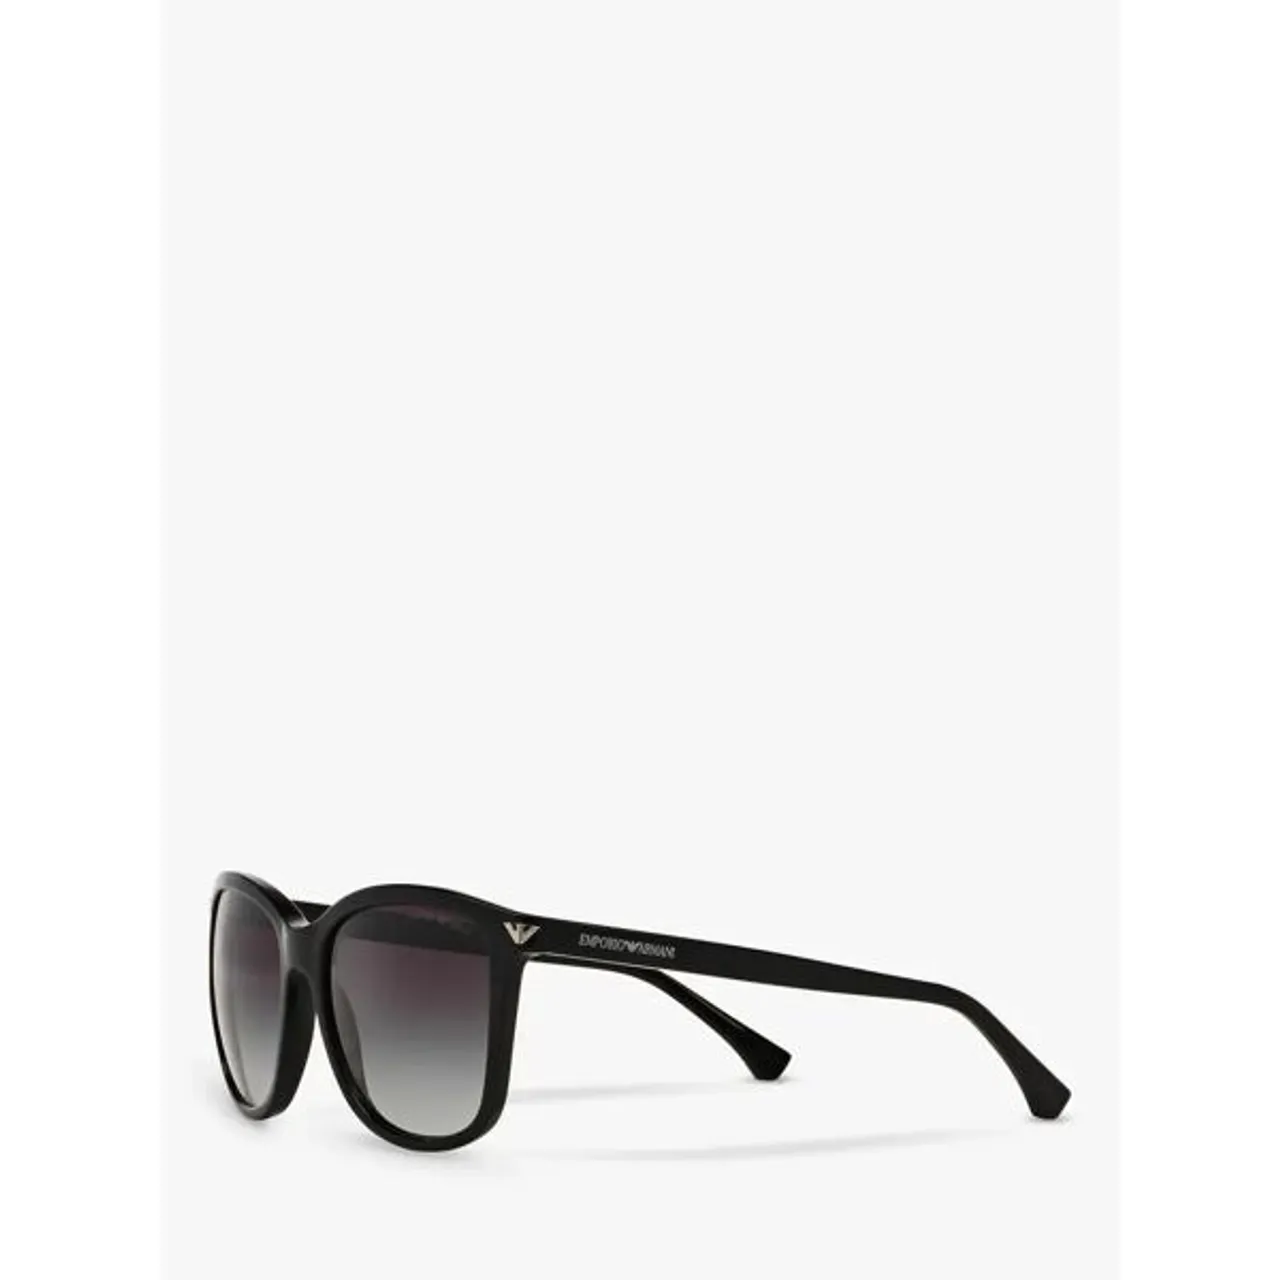 Emporio Armani Women's Square Sunglasses, Black/Grey Gradient - Black/Grey Gradient - Female